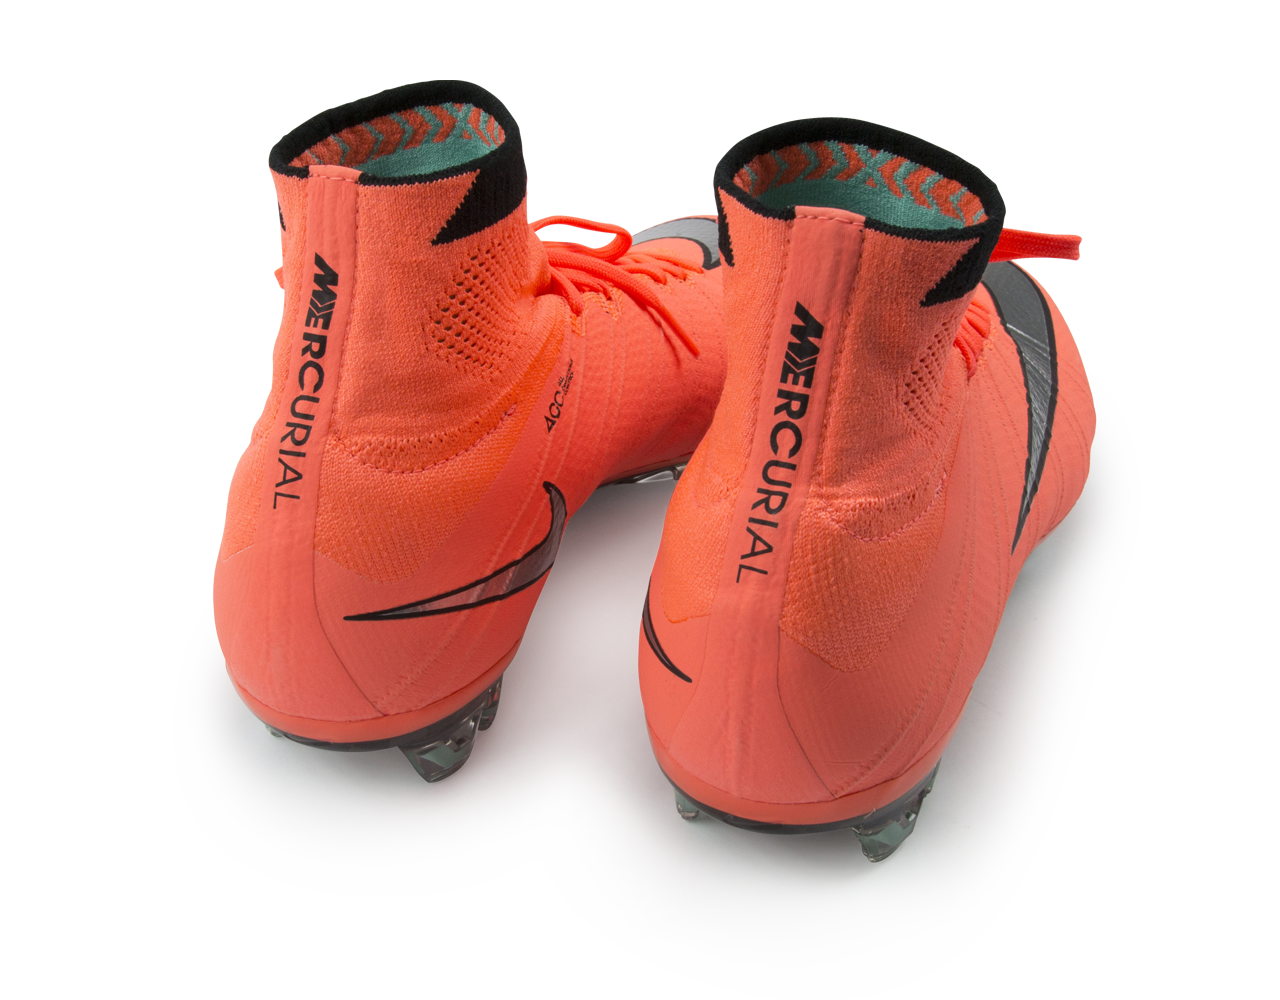 Nike Men's Mercurial Superfly FG Bright Mango/Metallic Sliver/Hyper Turqoise